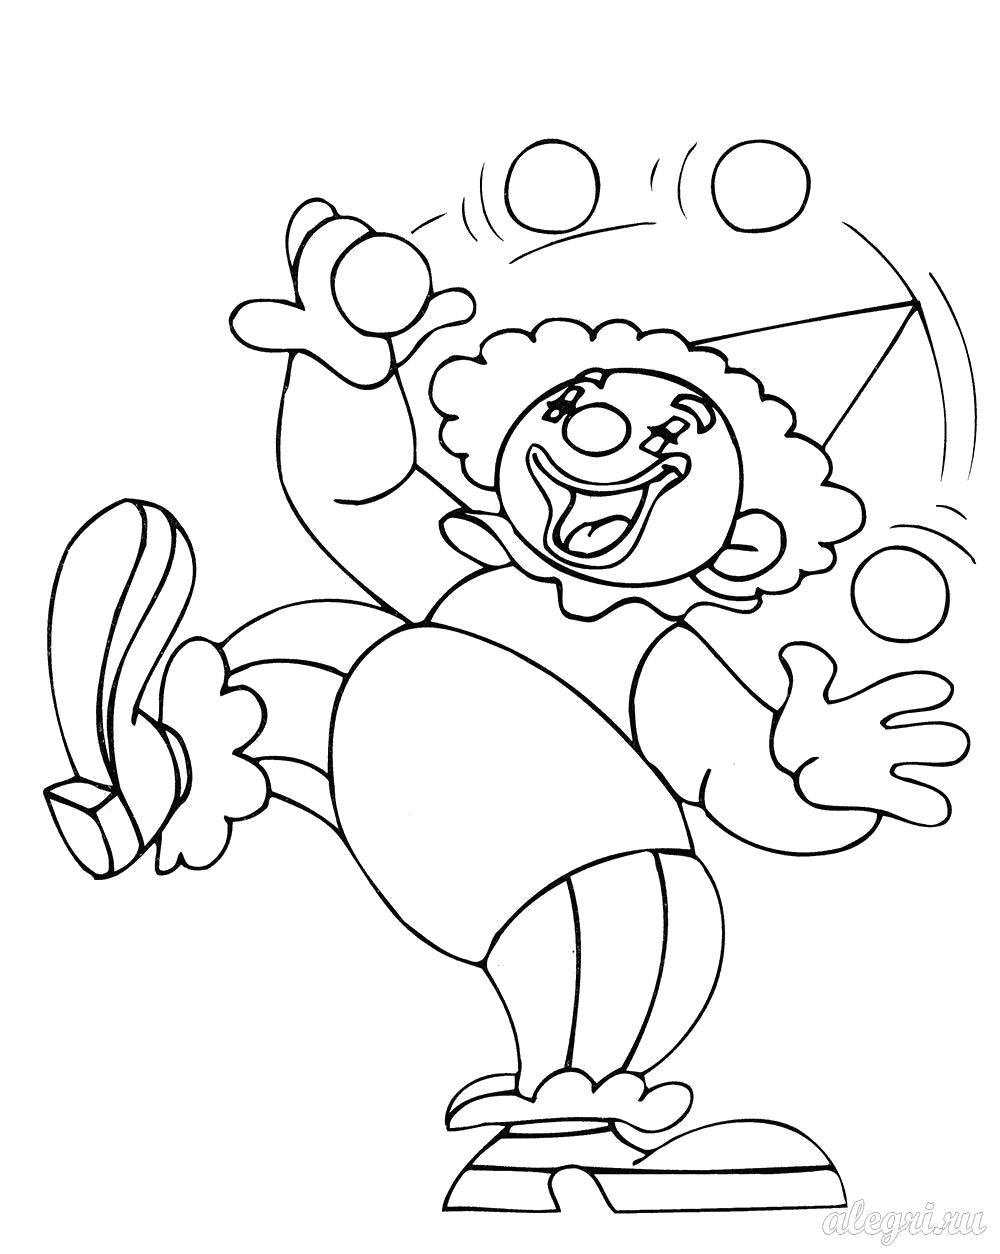 Название: Раскраска Клоун жонглирует, клоун стоит на одной ноге. Категория: клоун. Теги: клоун.